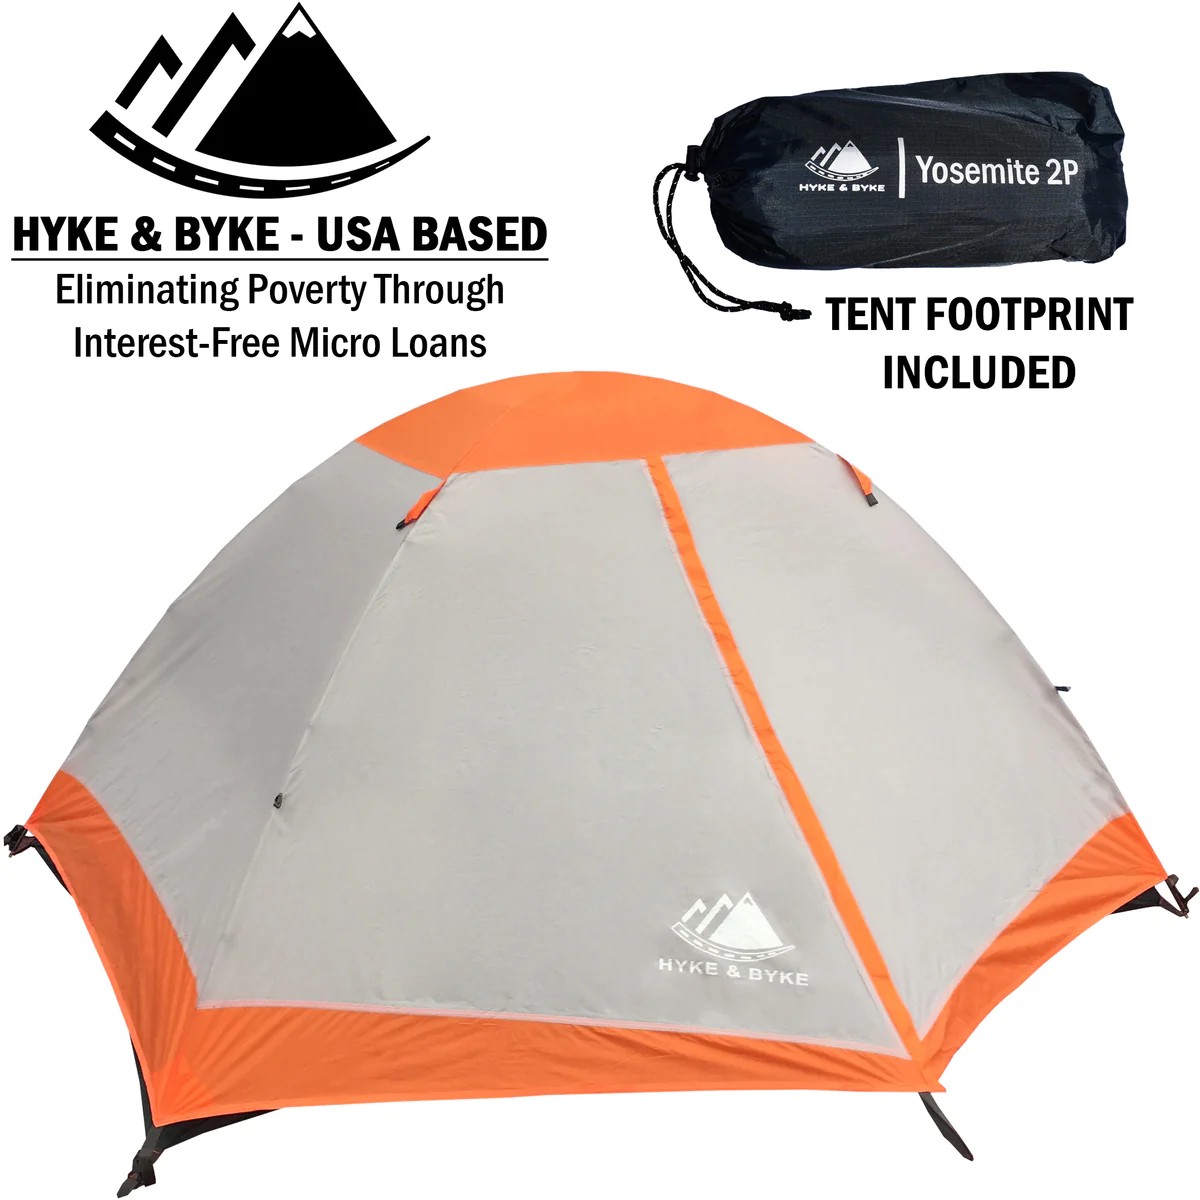 Hyke & Byke Yosemite Backpacking Tents with Footprint